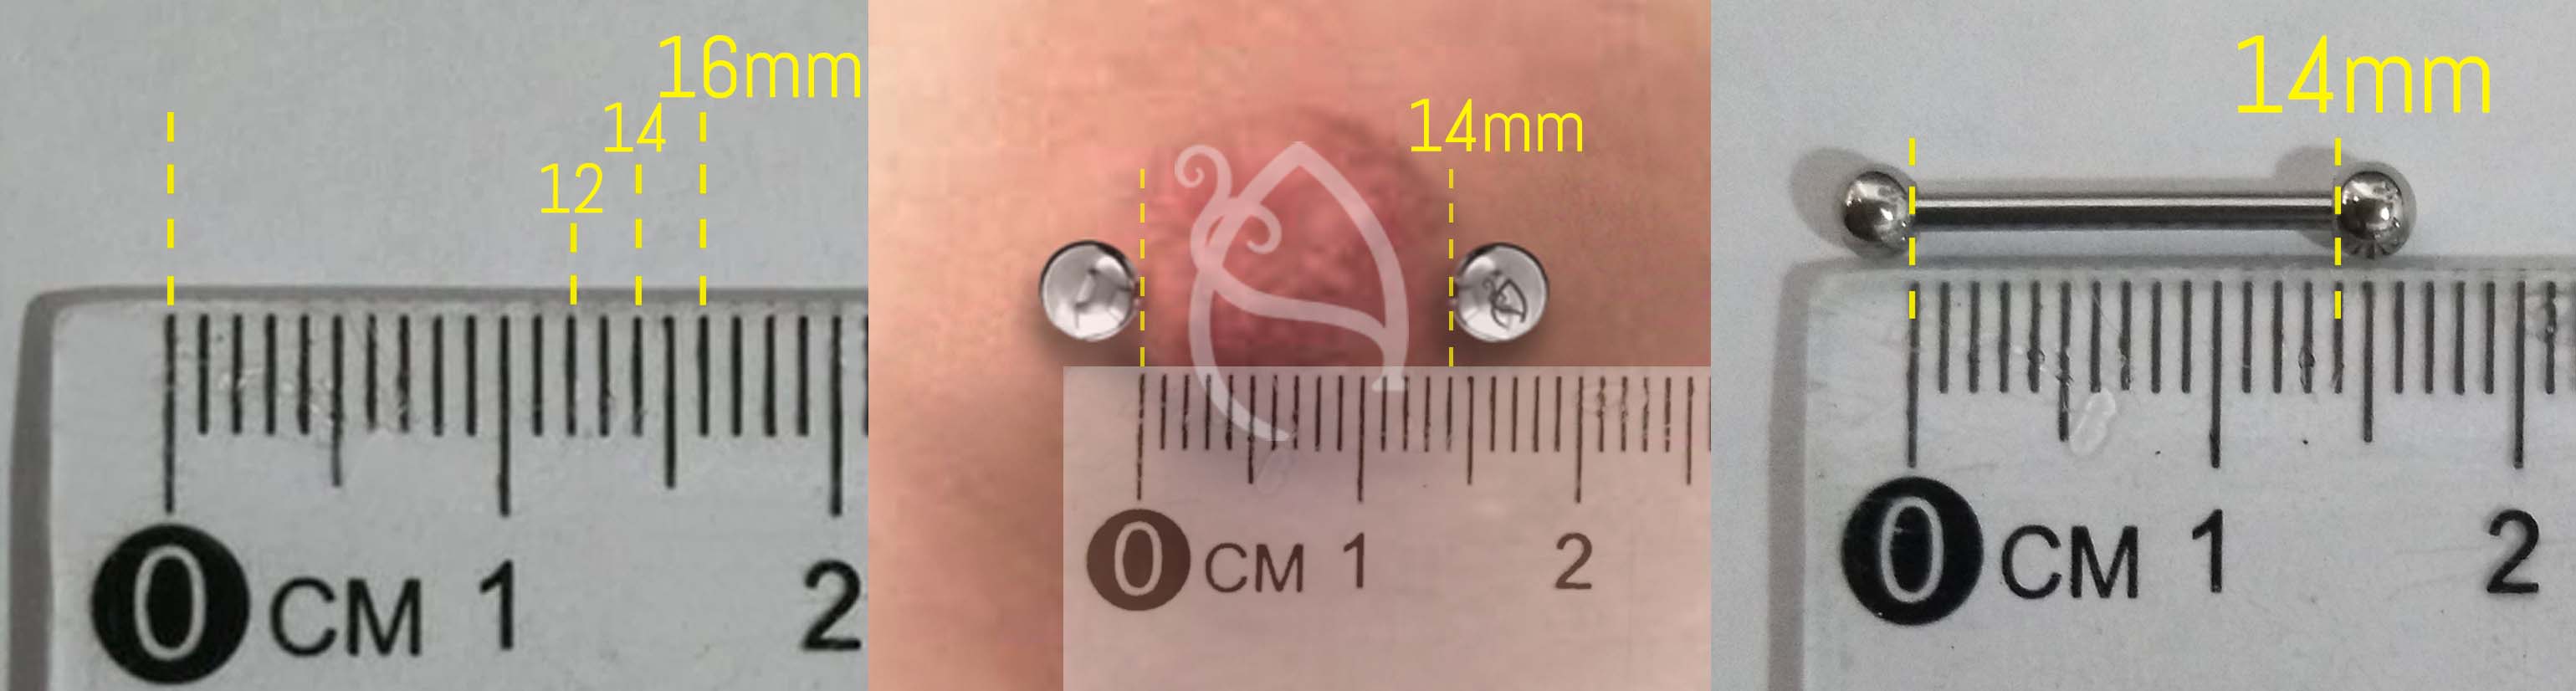 como-medir-piercing-3.jpg